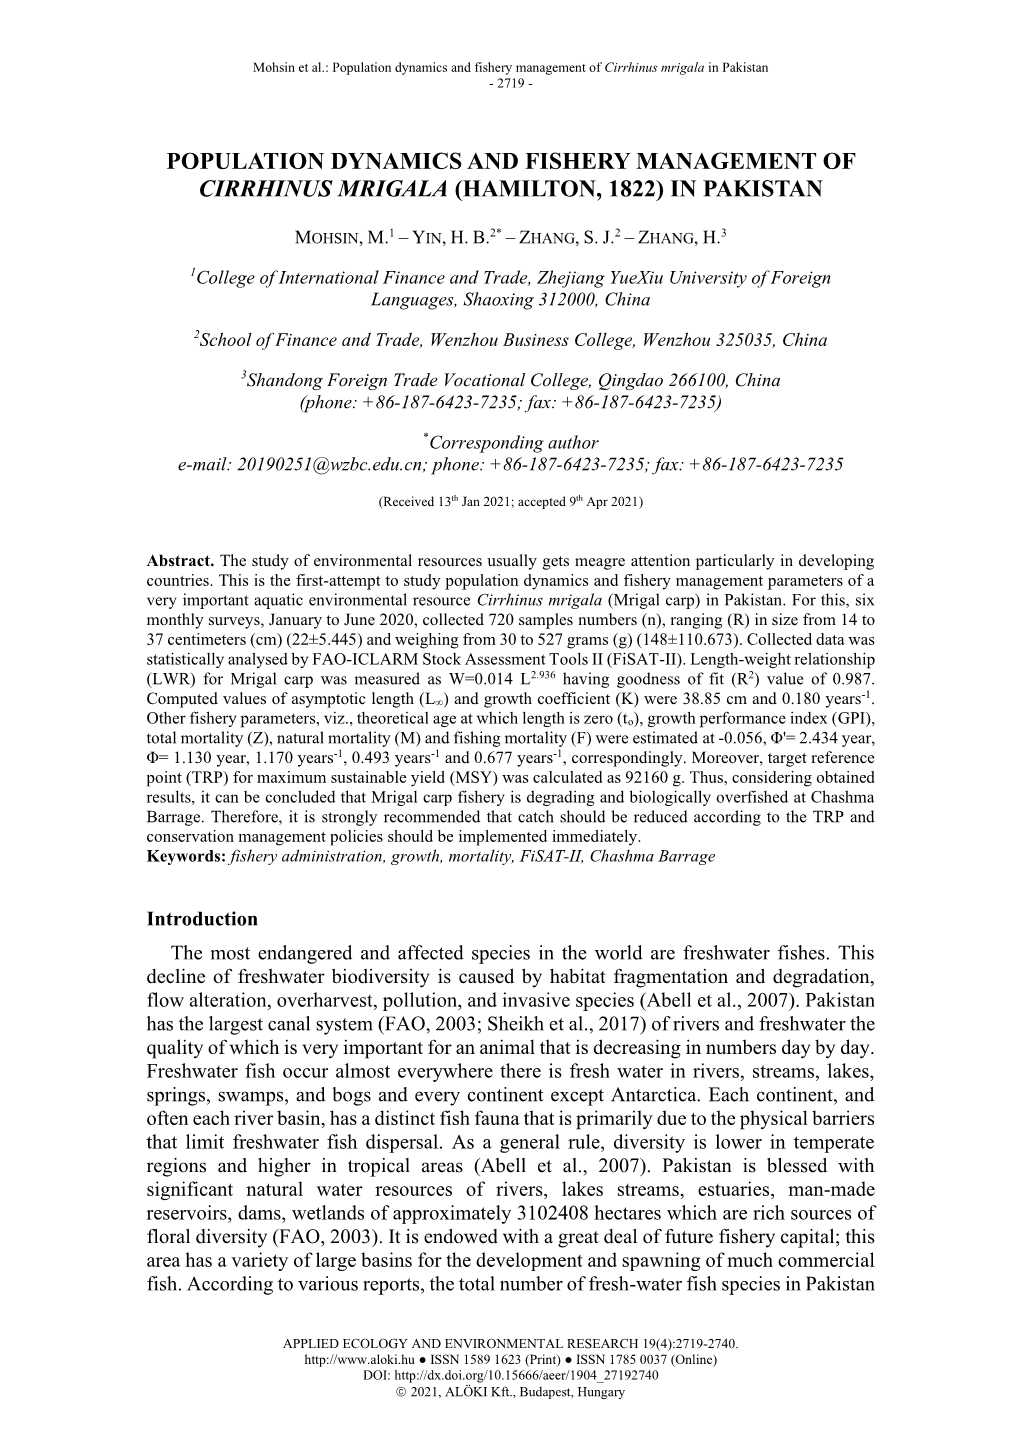 Population Dynamics and Fishery Management of Cirrhinus Mrigala in Pakistan - 2719